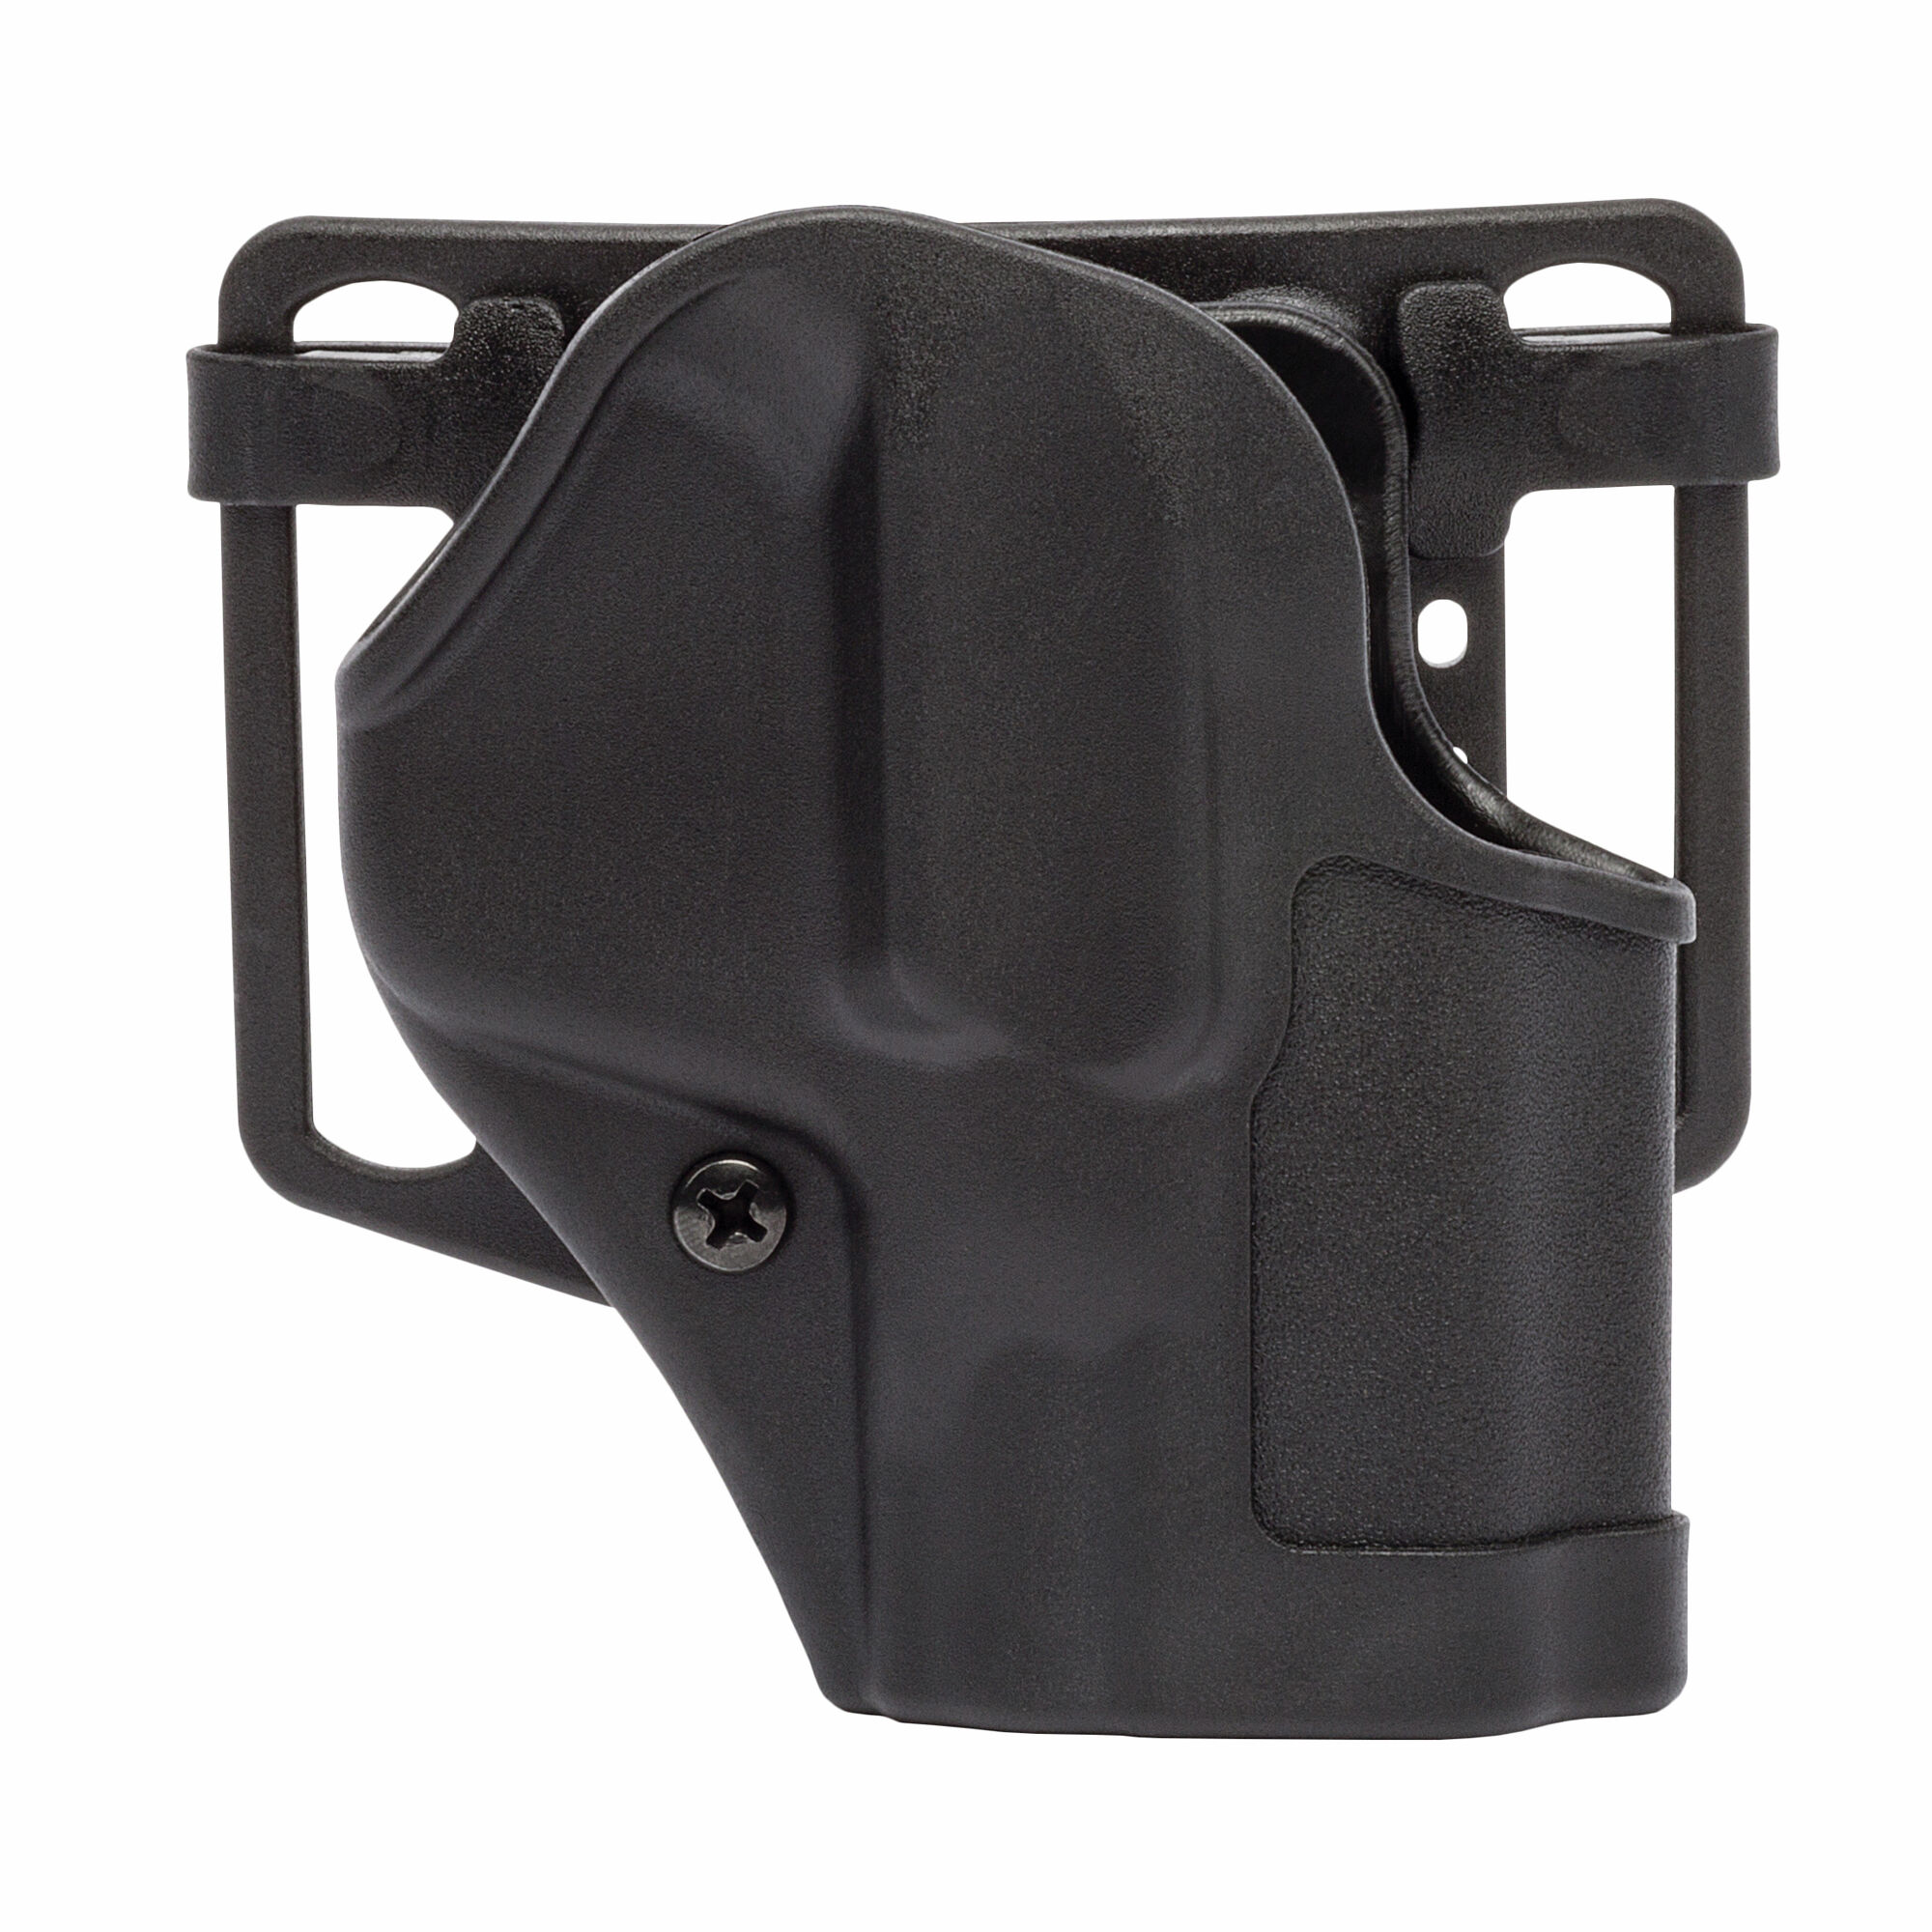 BLACKHAWK Sportster Standard CQC Concealment Holster fits M&P Shield 